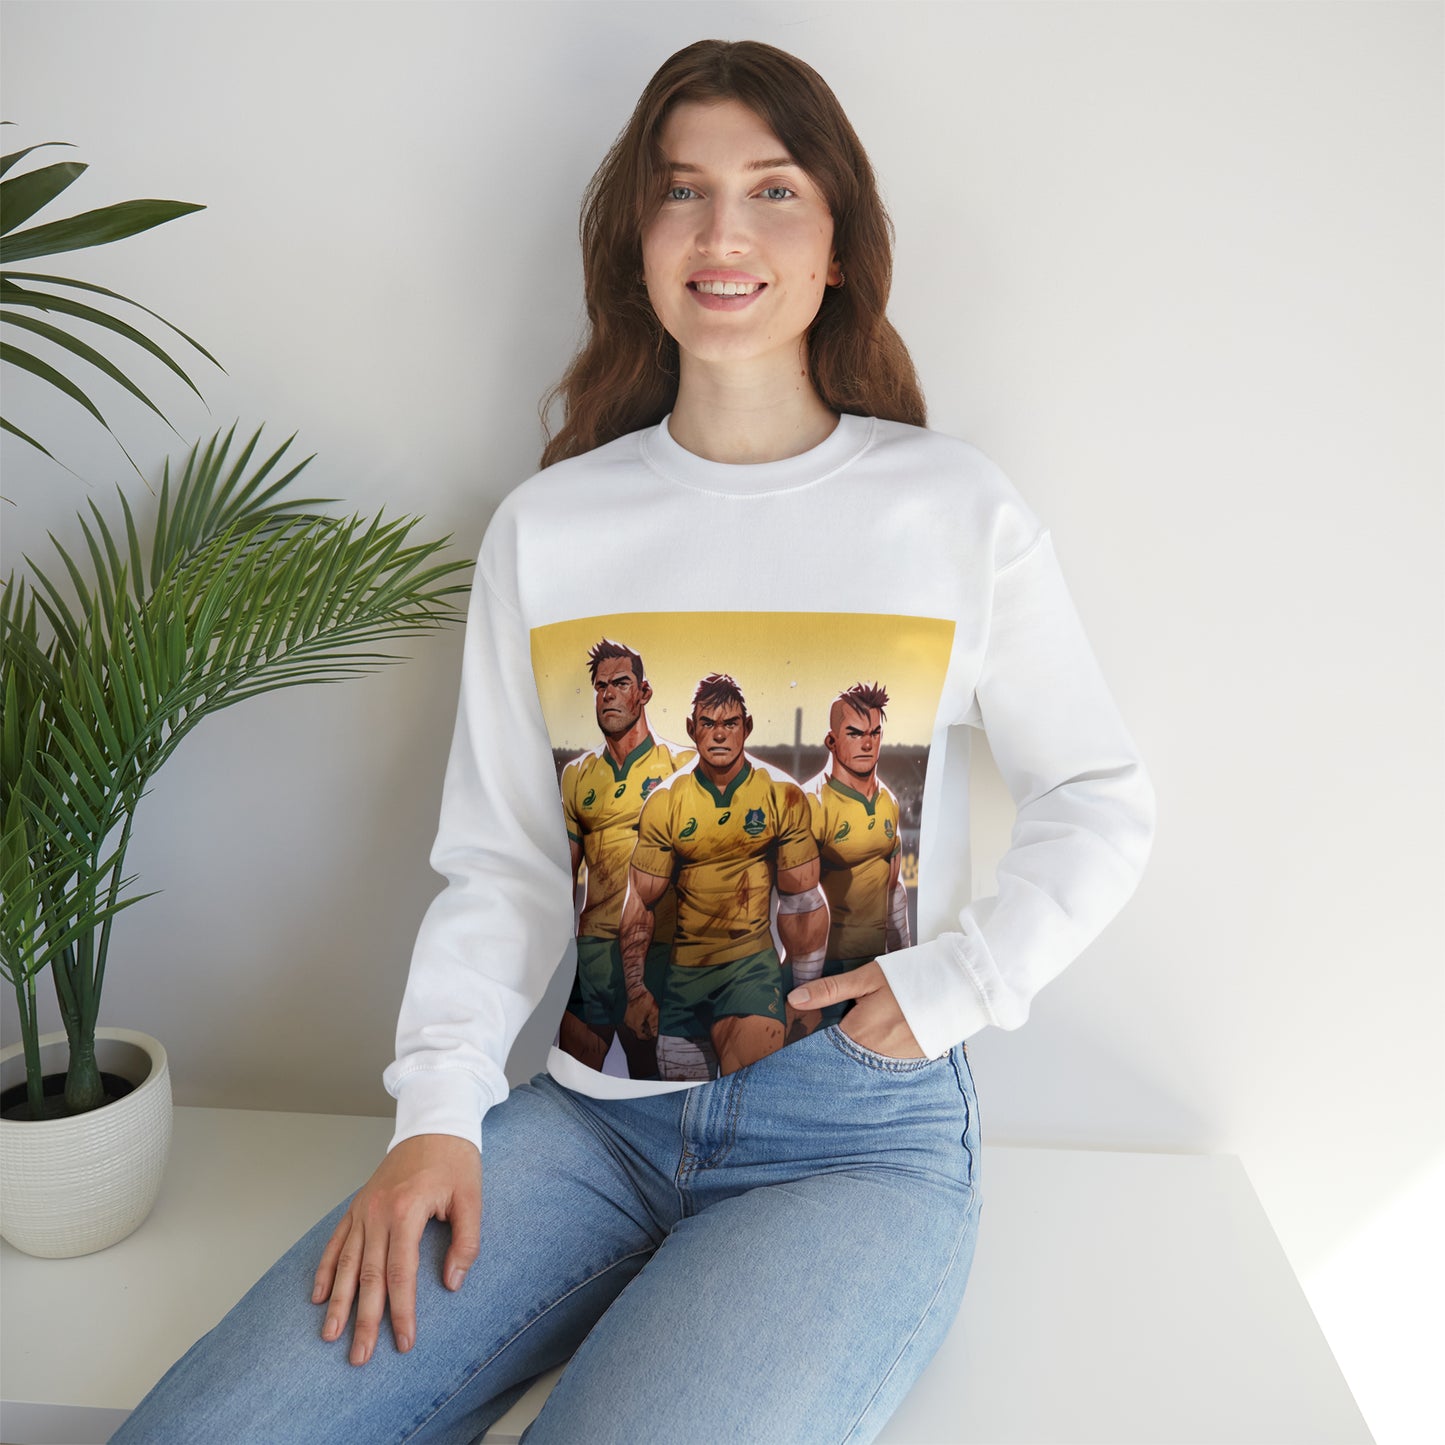 Ready Aussies - light sweatshirts